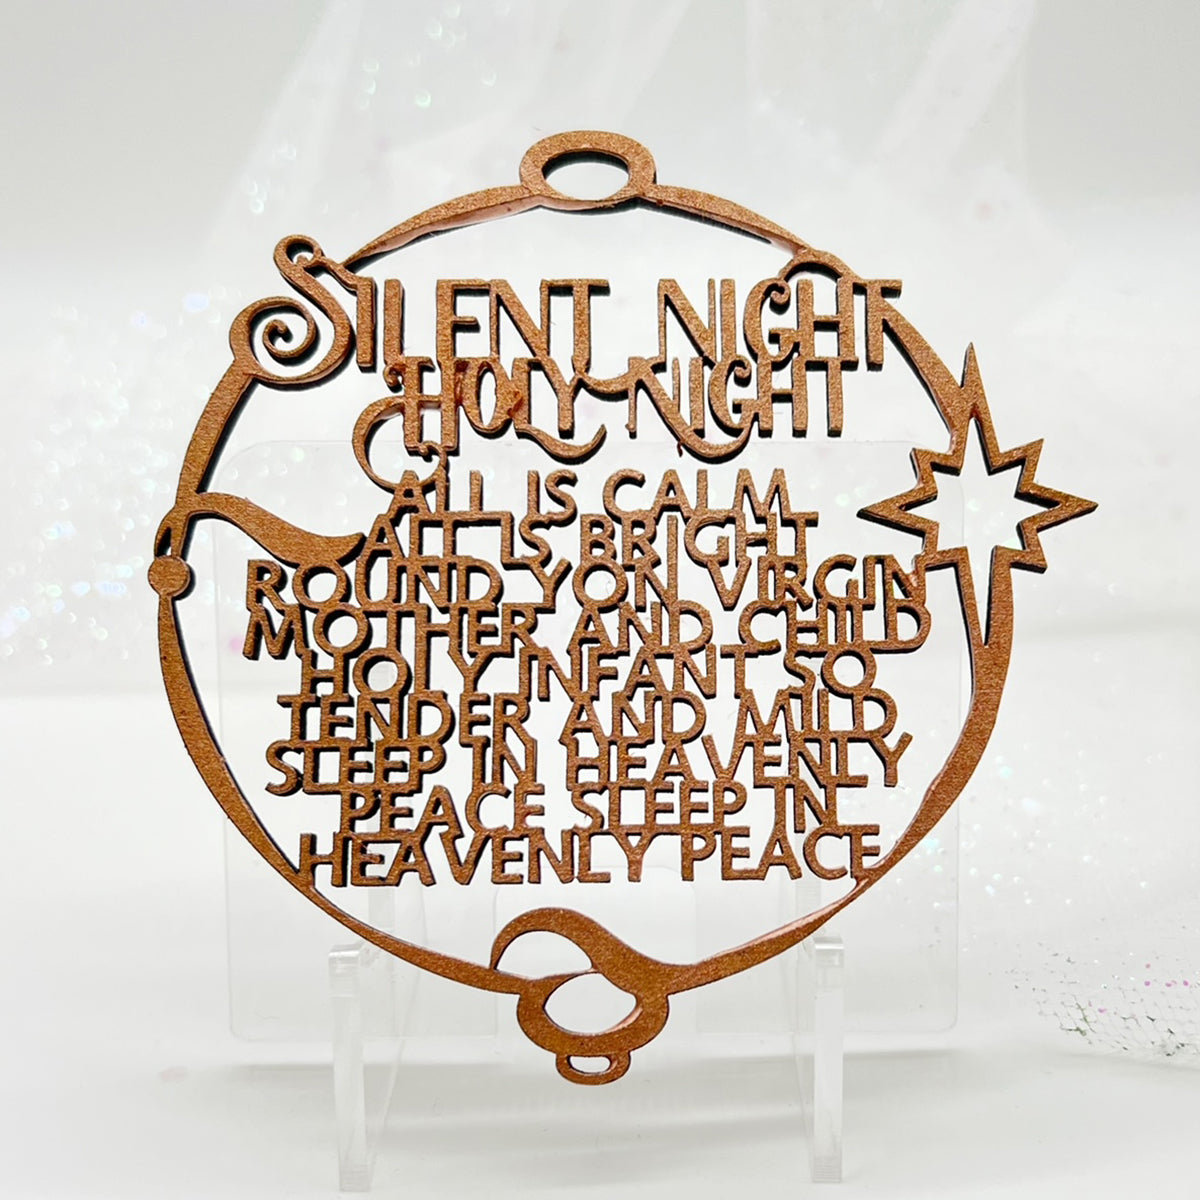 Christmas Carol Ornament - Silent Night